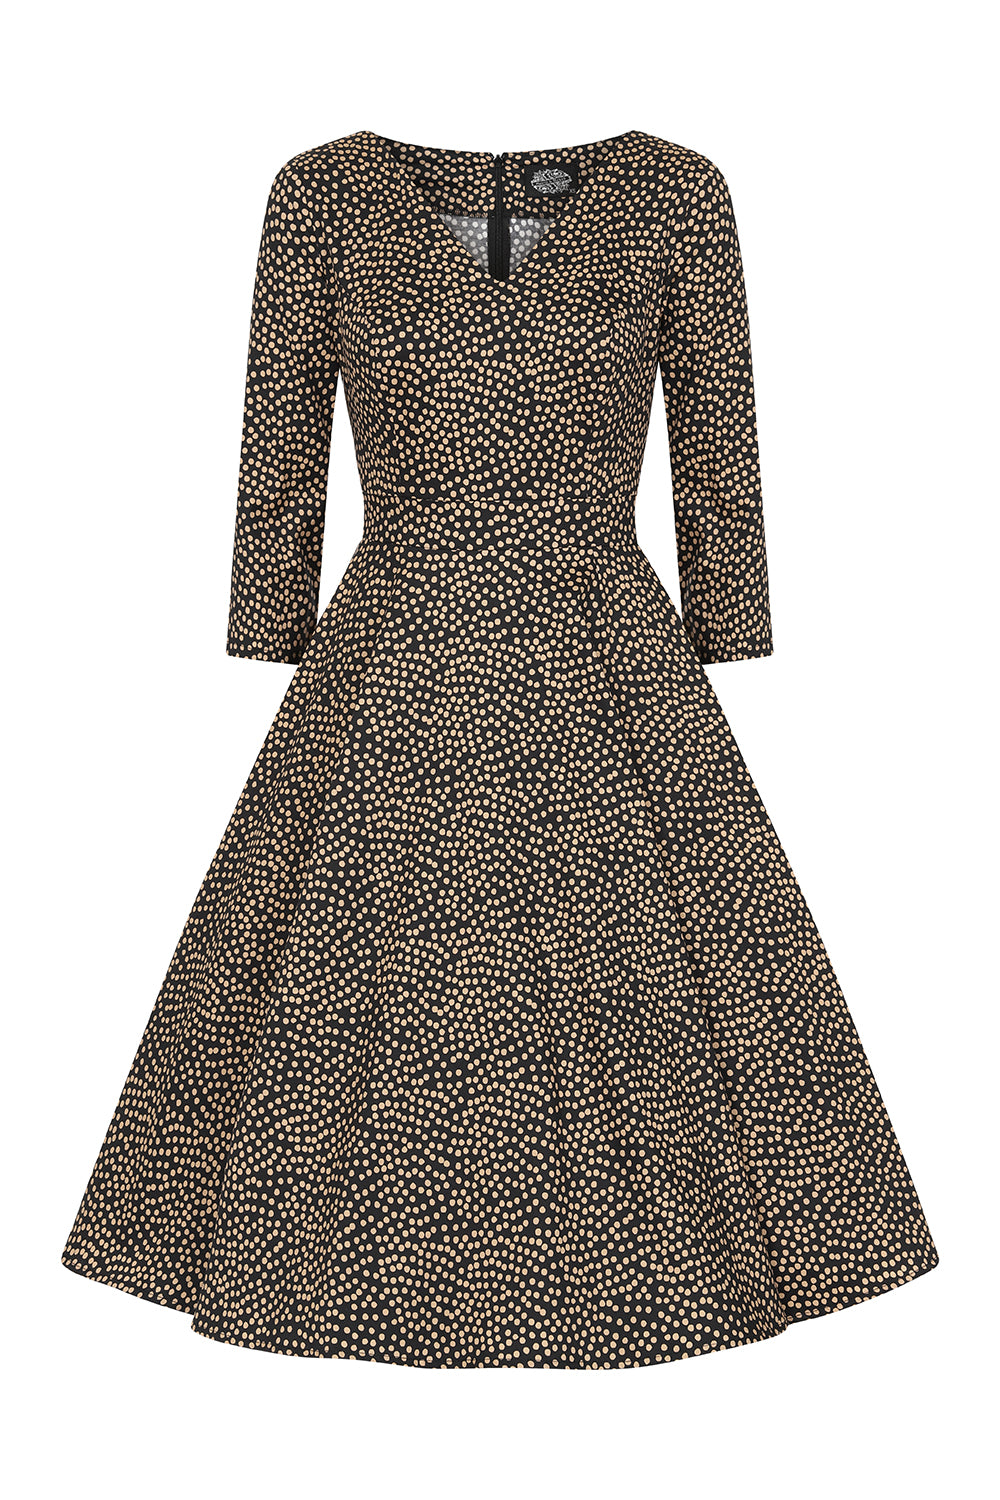 Aubrey 1950s 3 Quarter Sleeve Polka Dot Swing Dress